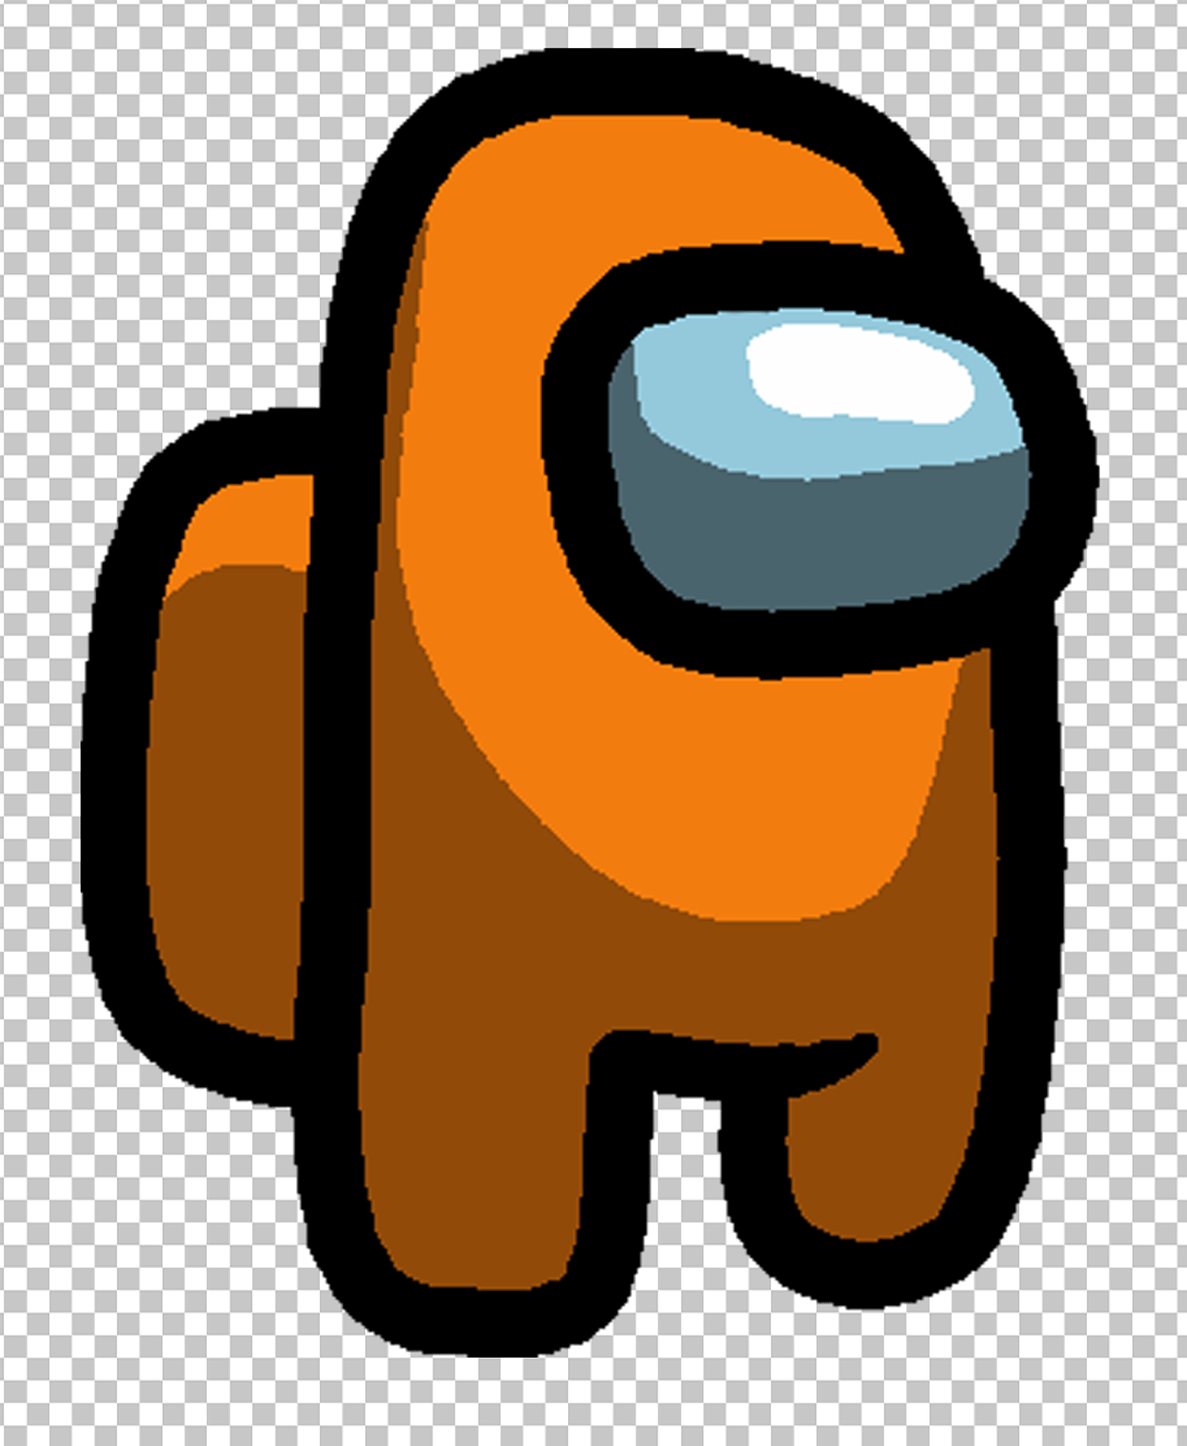 Orange Among Us Character PNG Image